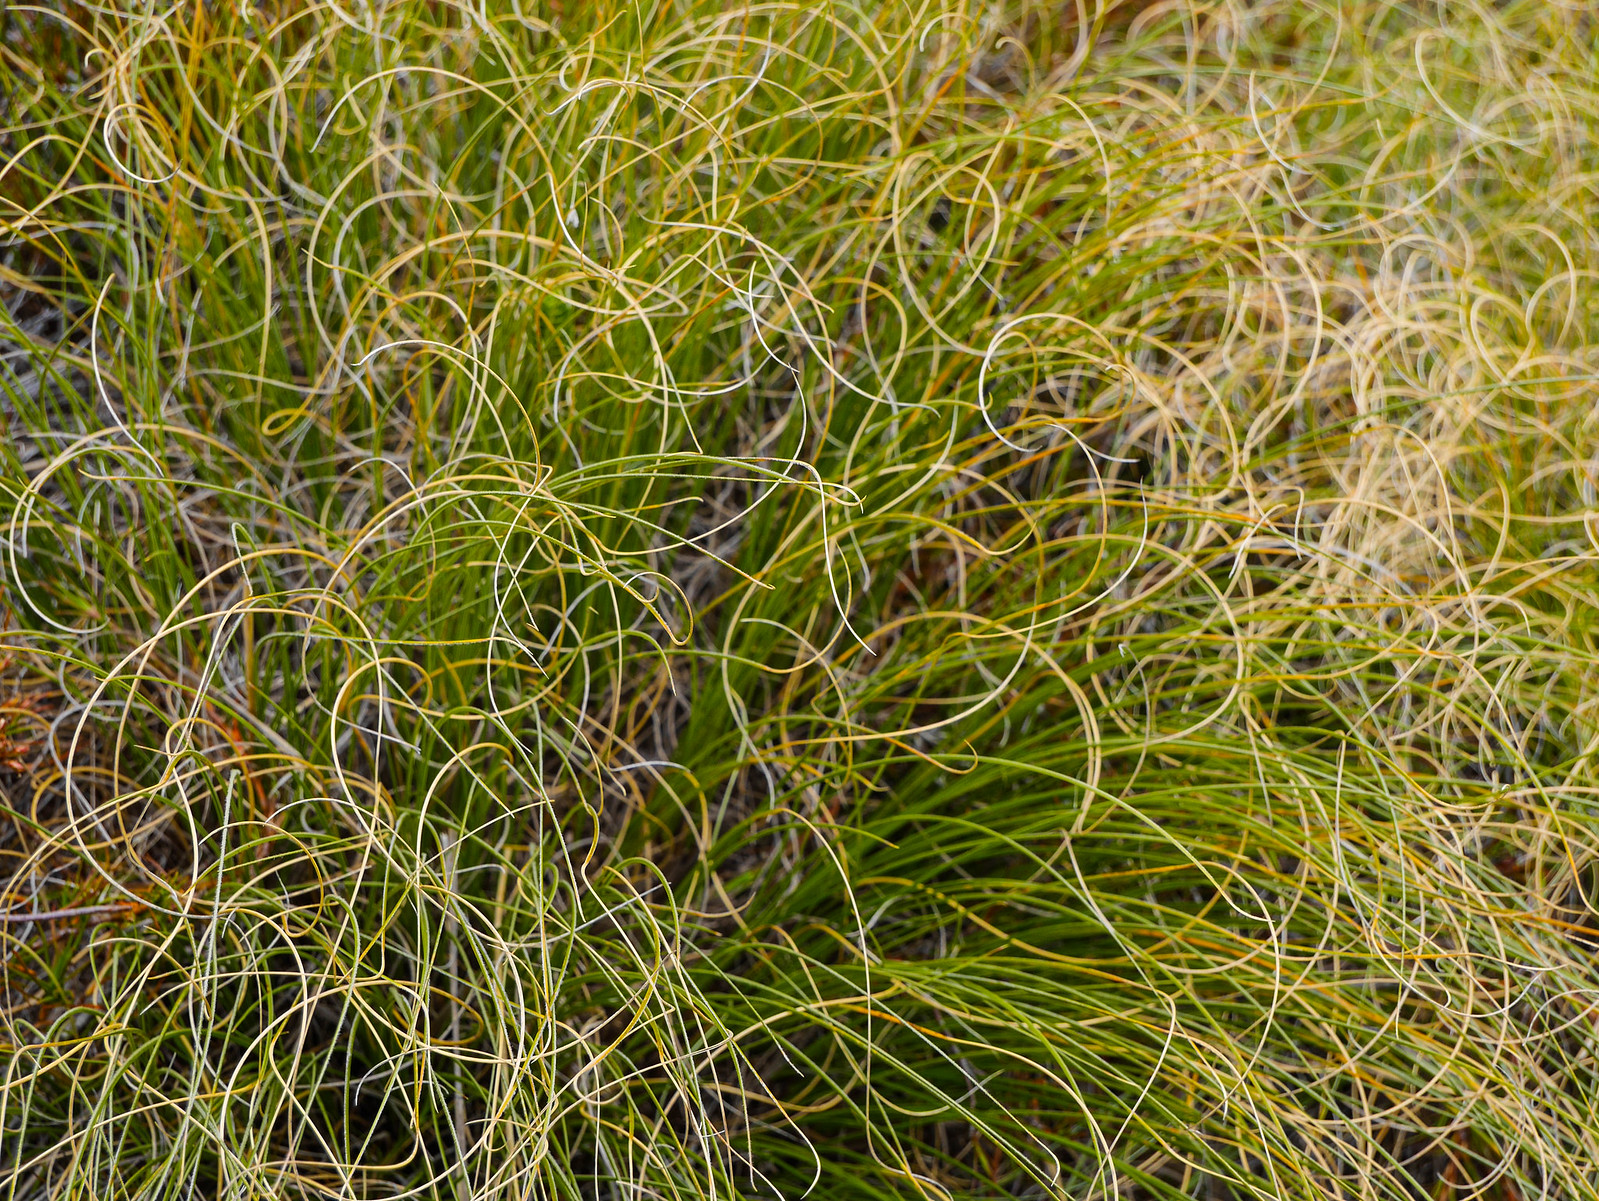 Grasses curl to conserve moisture when it's windy